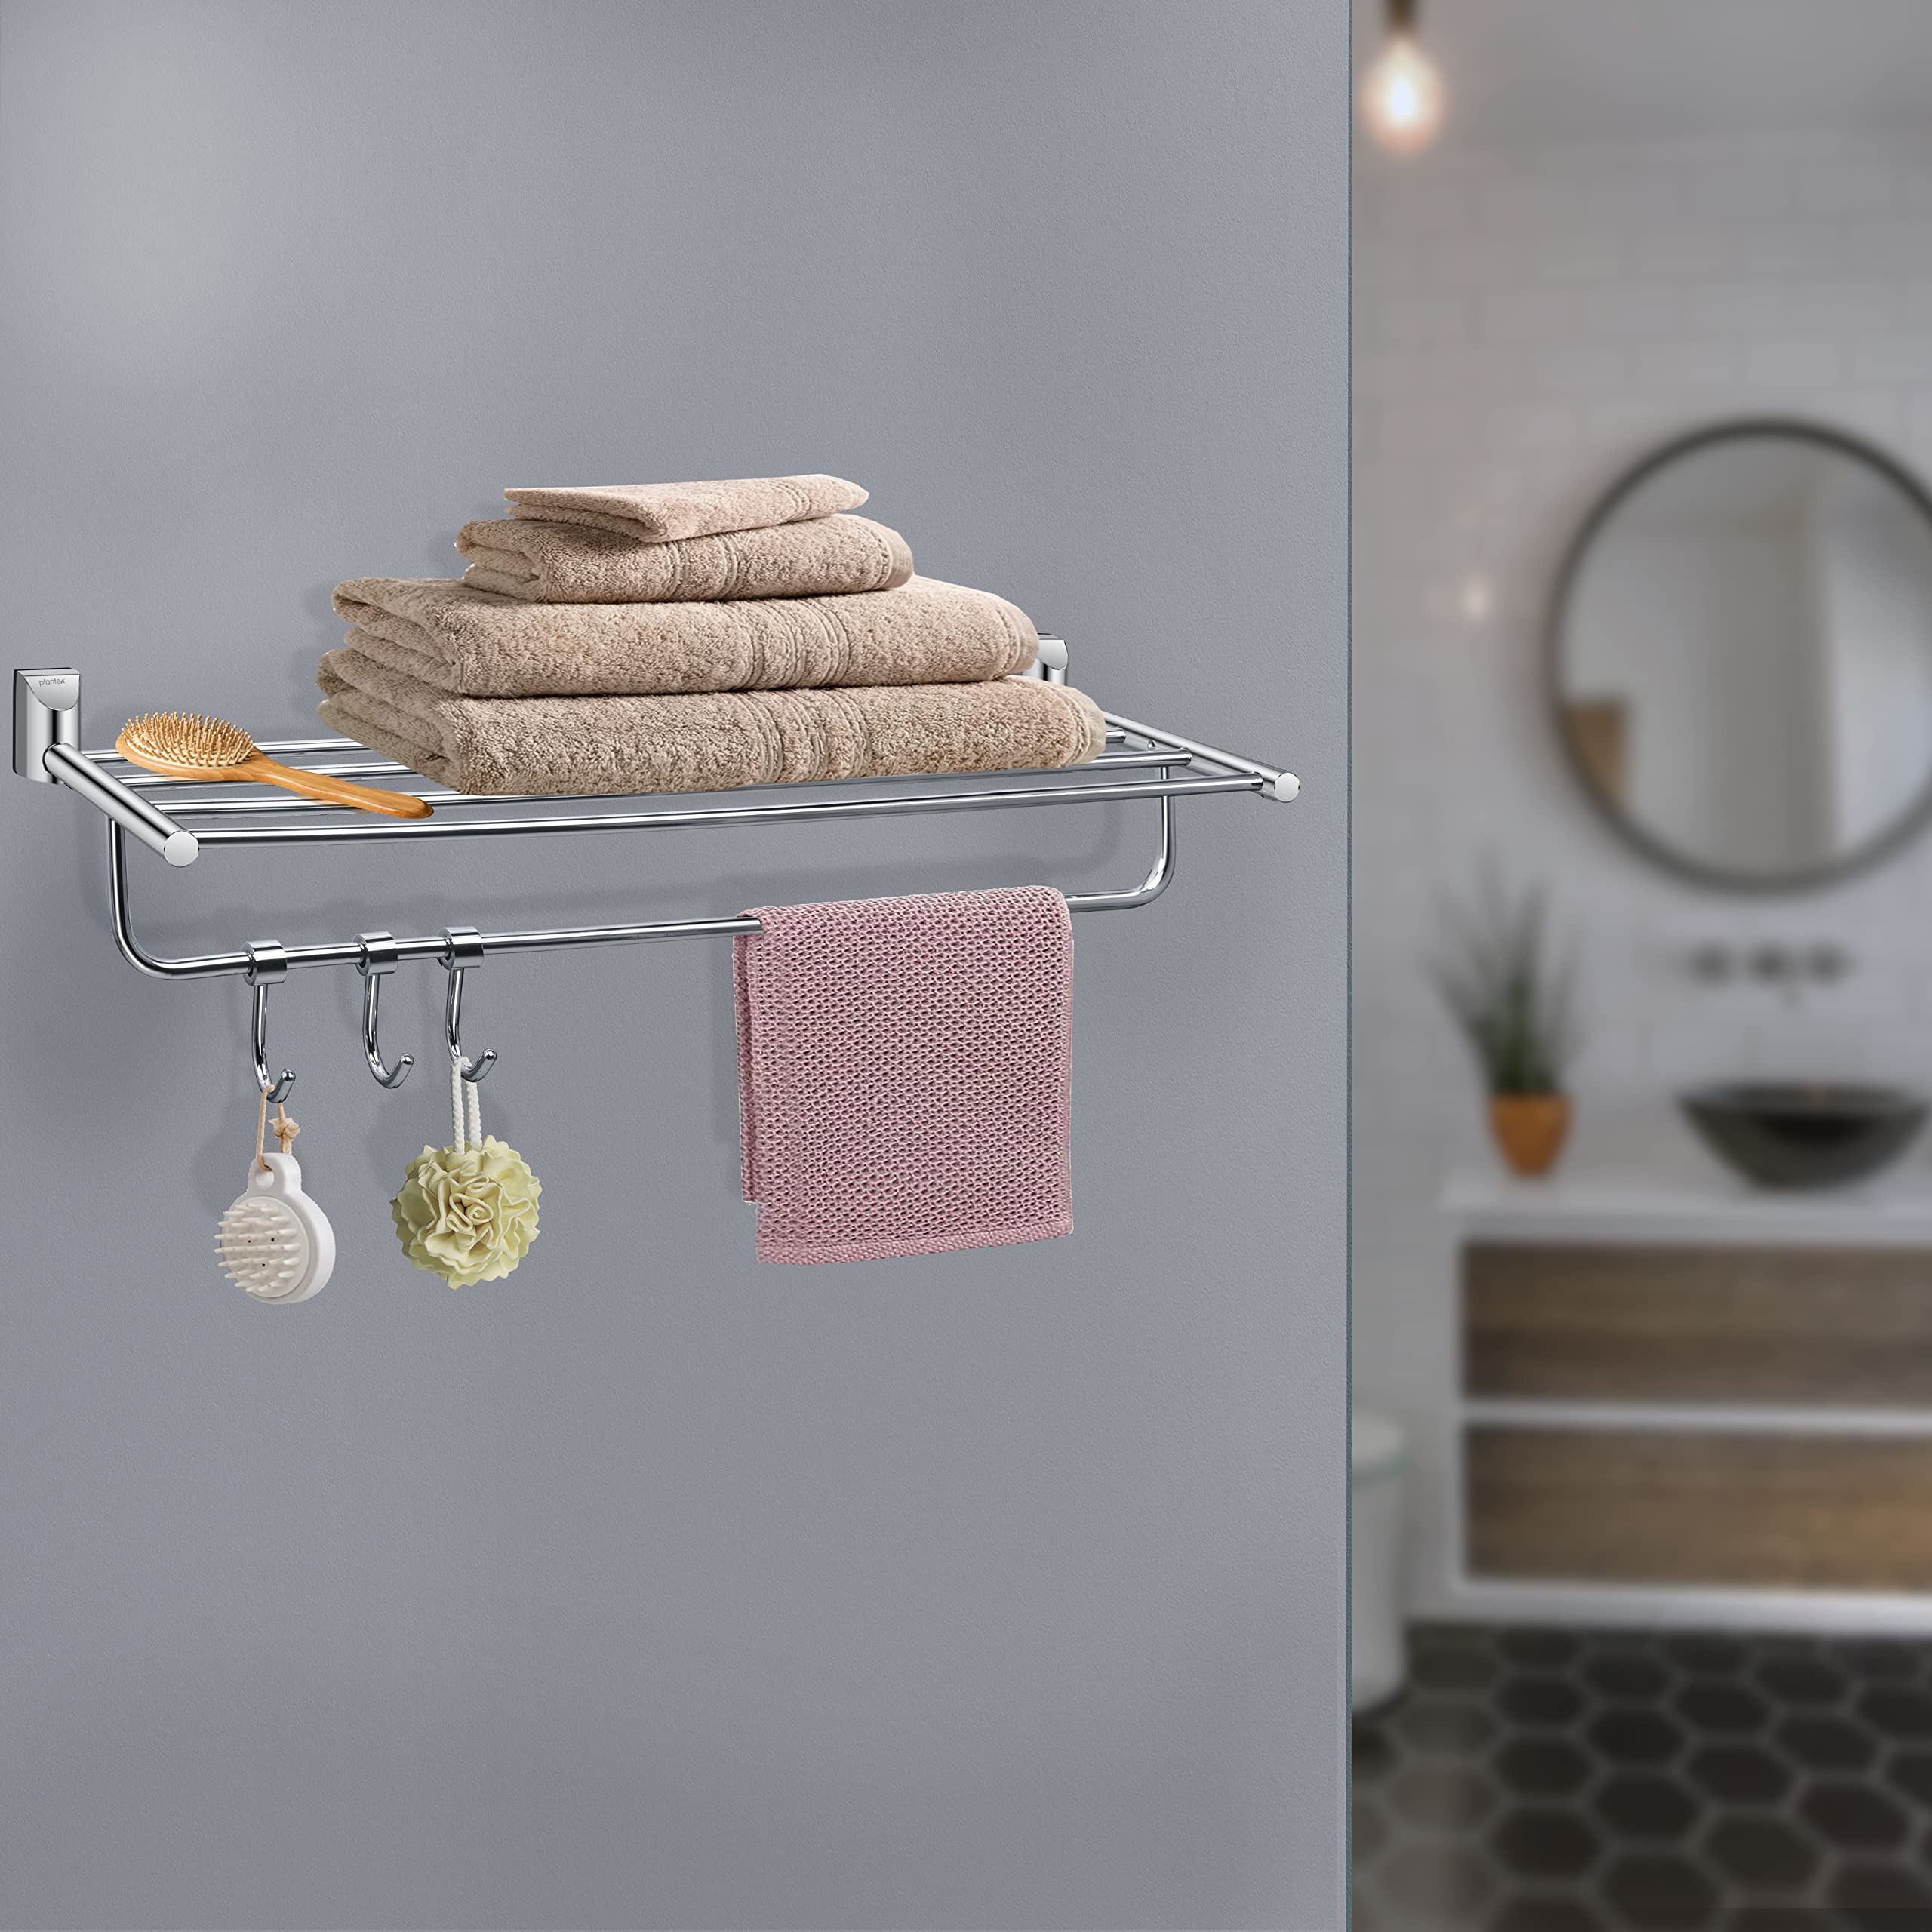 Plantex Fully Brass Smero Towel Rack for Bathroom/Towel Stand/Hanger/Bathroom Accessories - 24 Inch - Chrome (SU-5131)